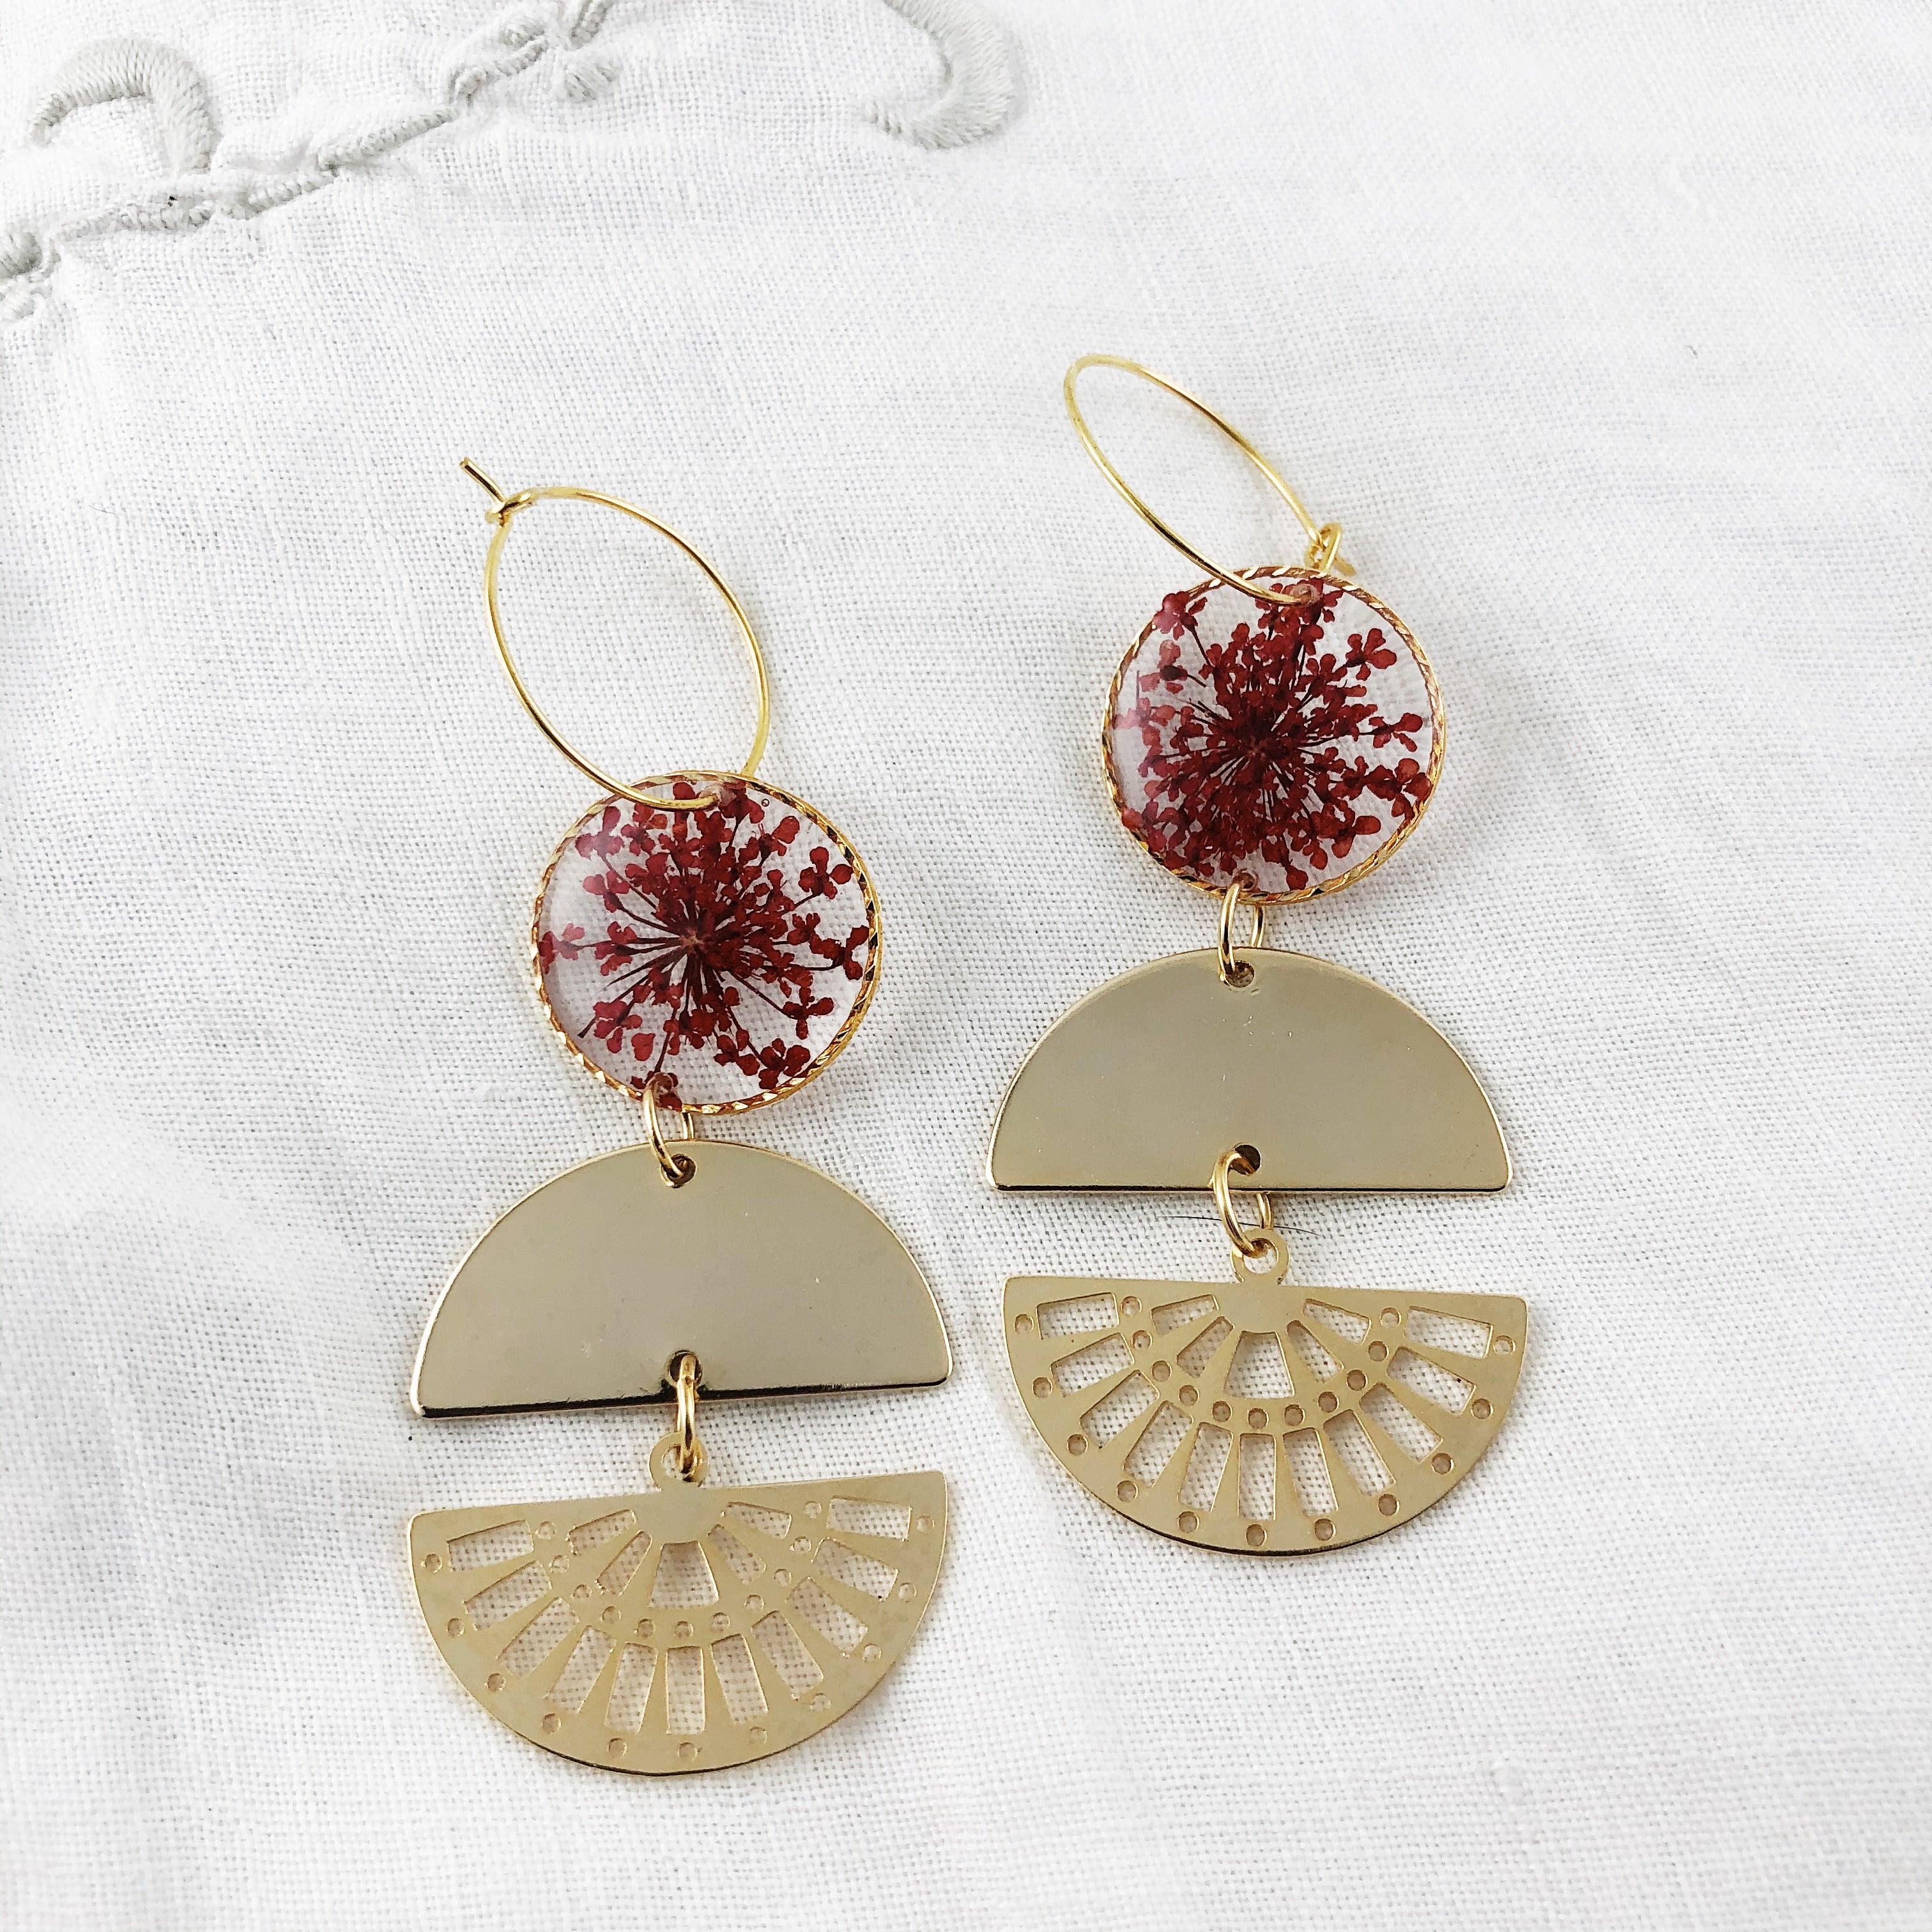 Gold Geometric Fan Earrings with Pressed Red Flowers